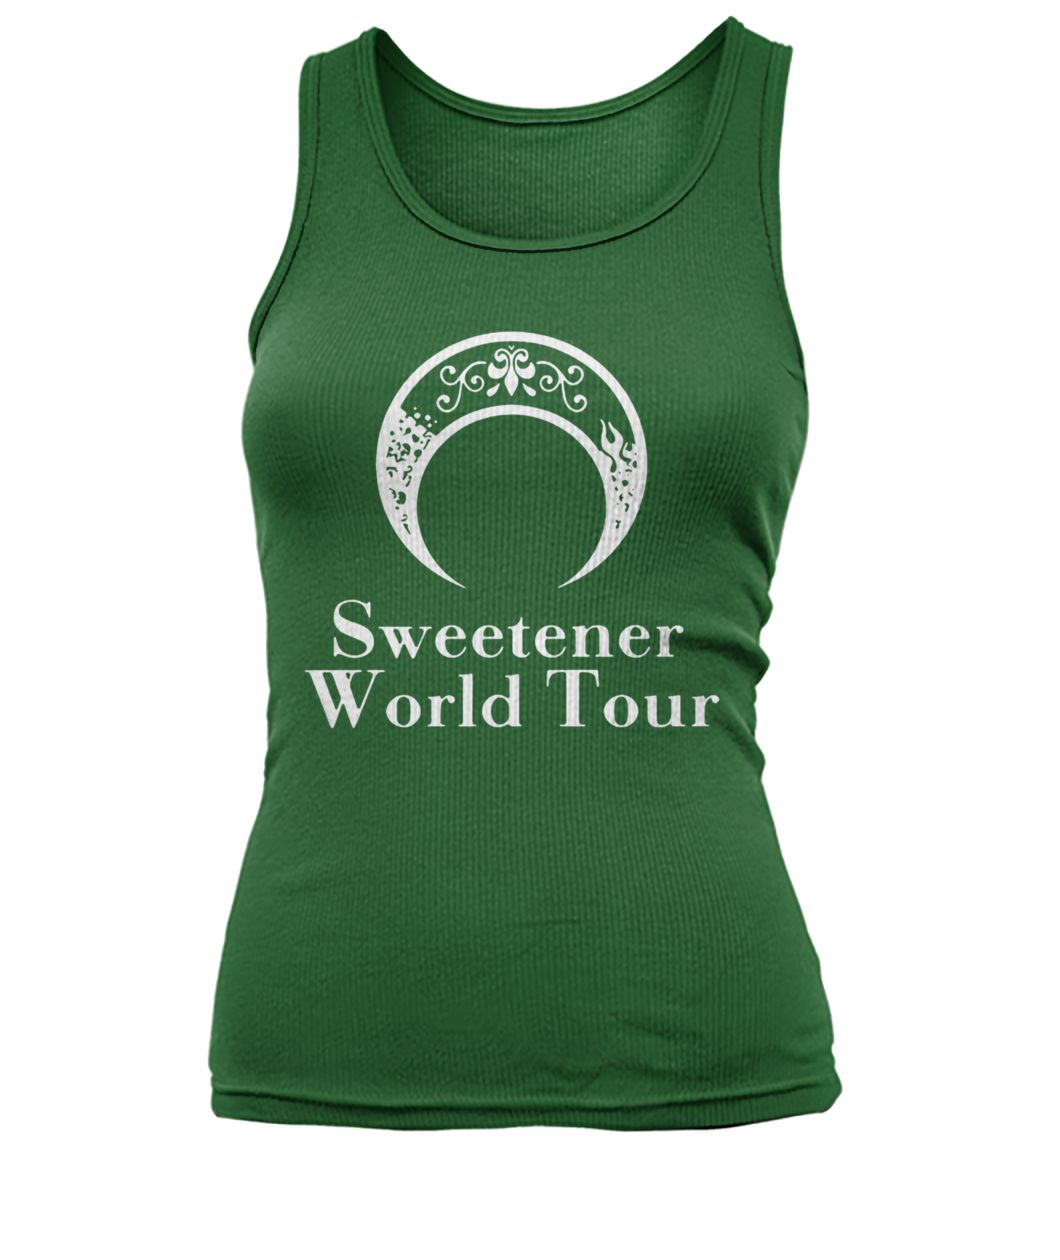 Sweetener world tour women's tank top